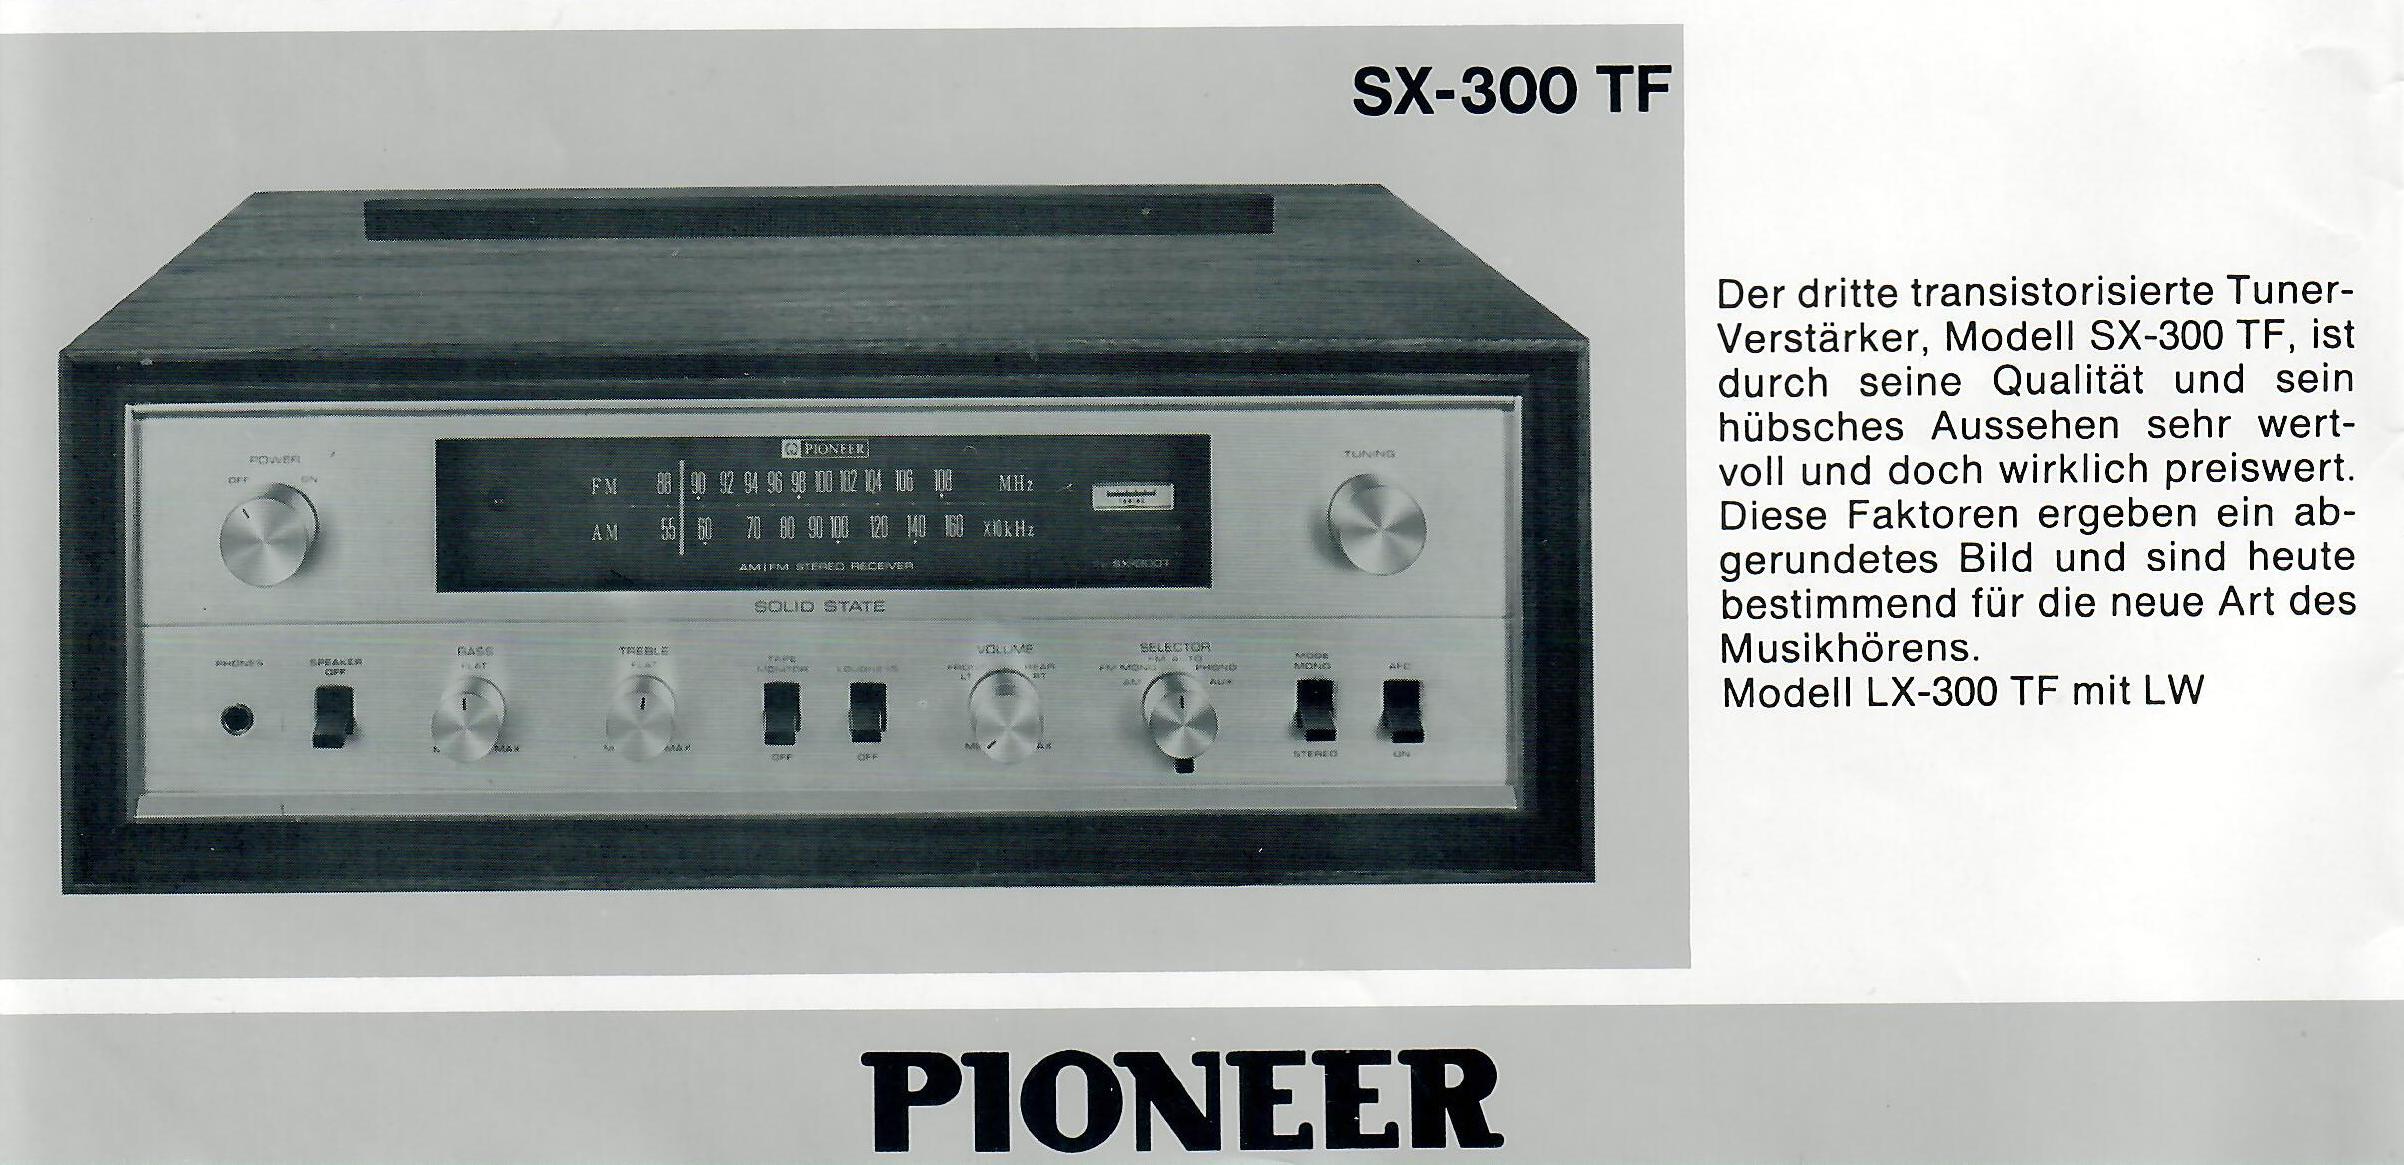 Pioneer SX-300 TF-Prospekt-1.jpg